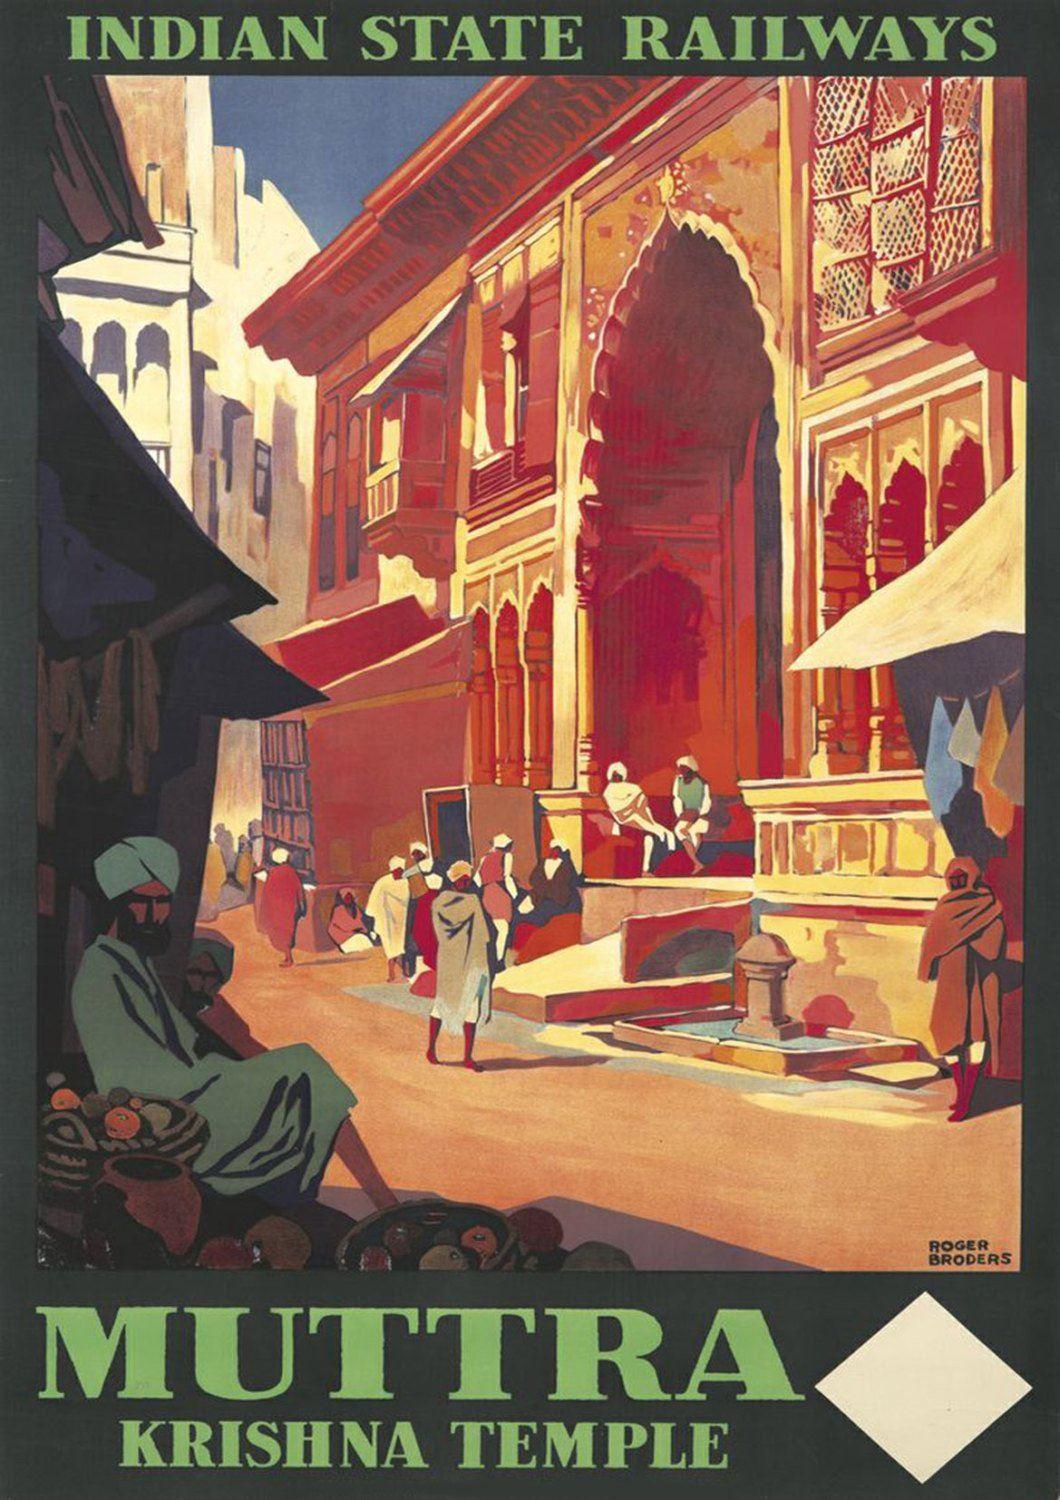 MATHURA INDIA POSTER: Vintage Muttra Tourism Advert - Pimlico Prints